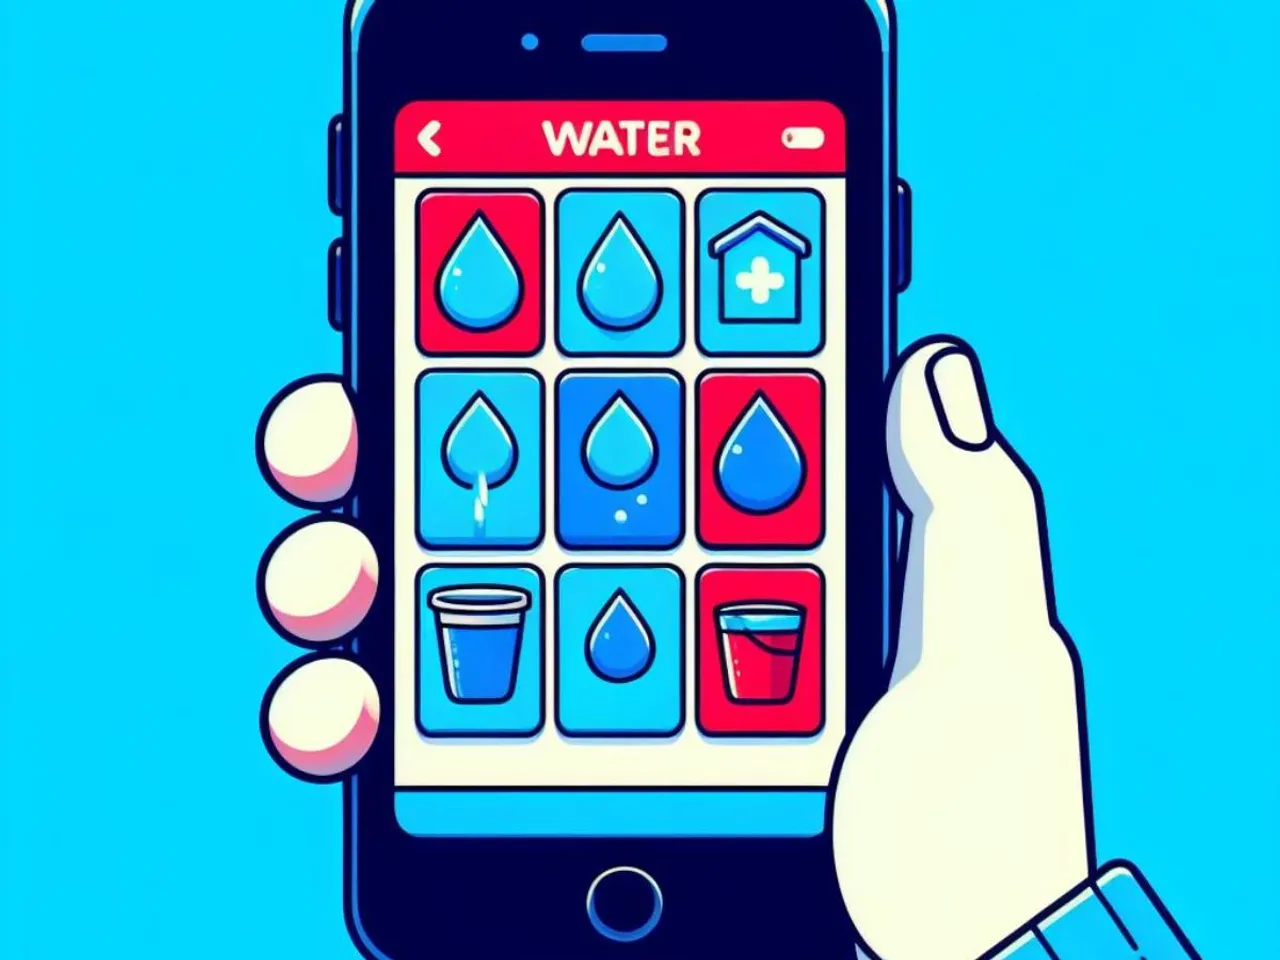 Water reminder apps